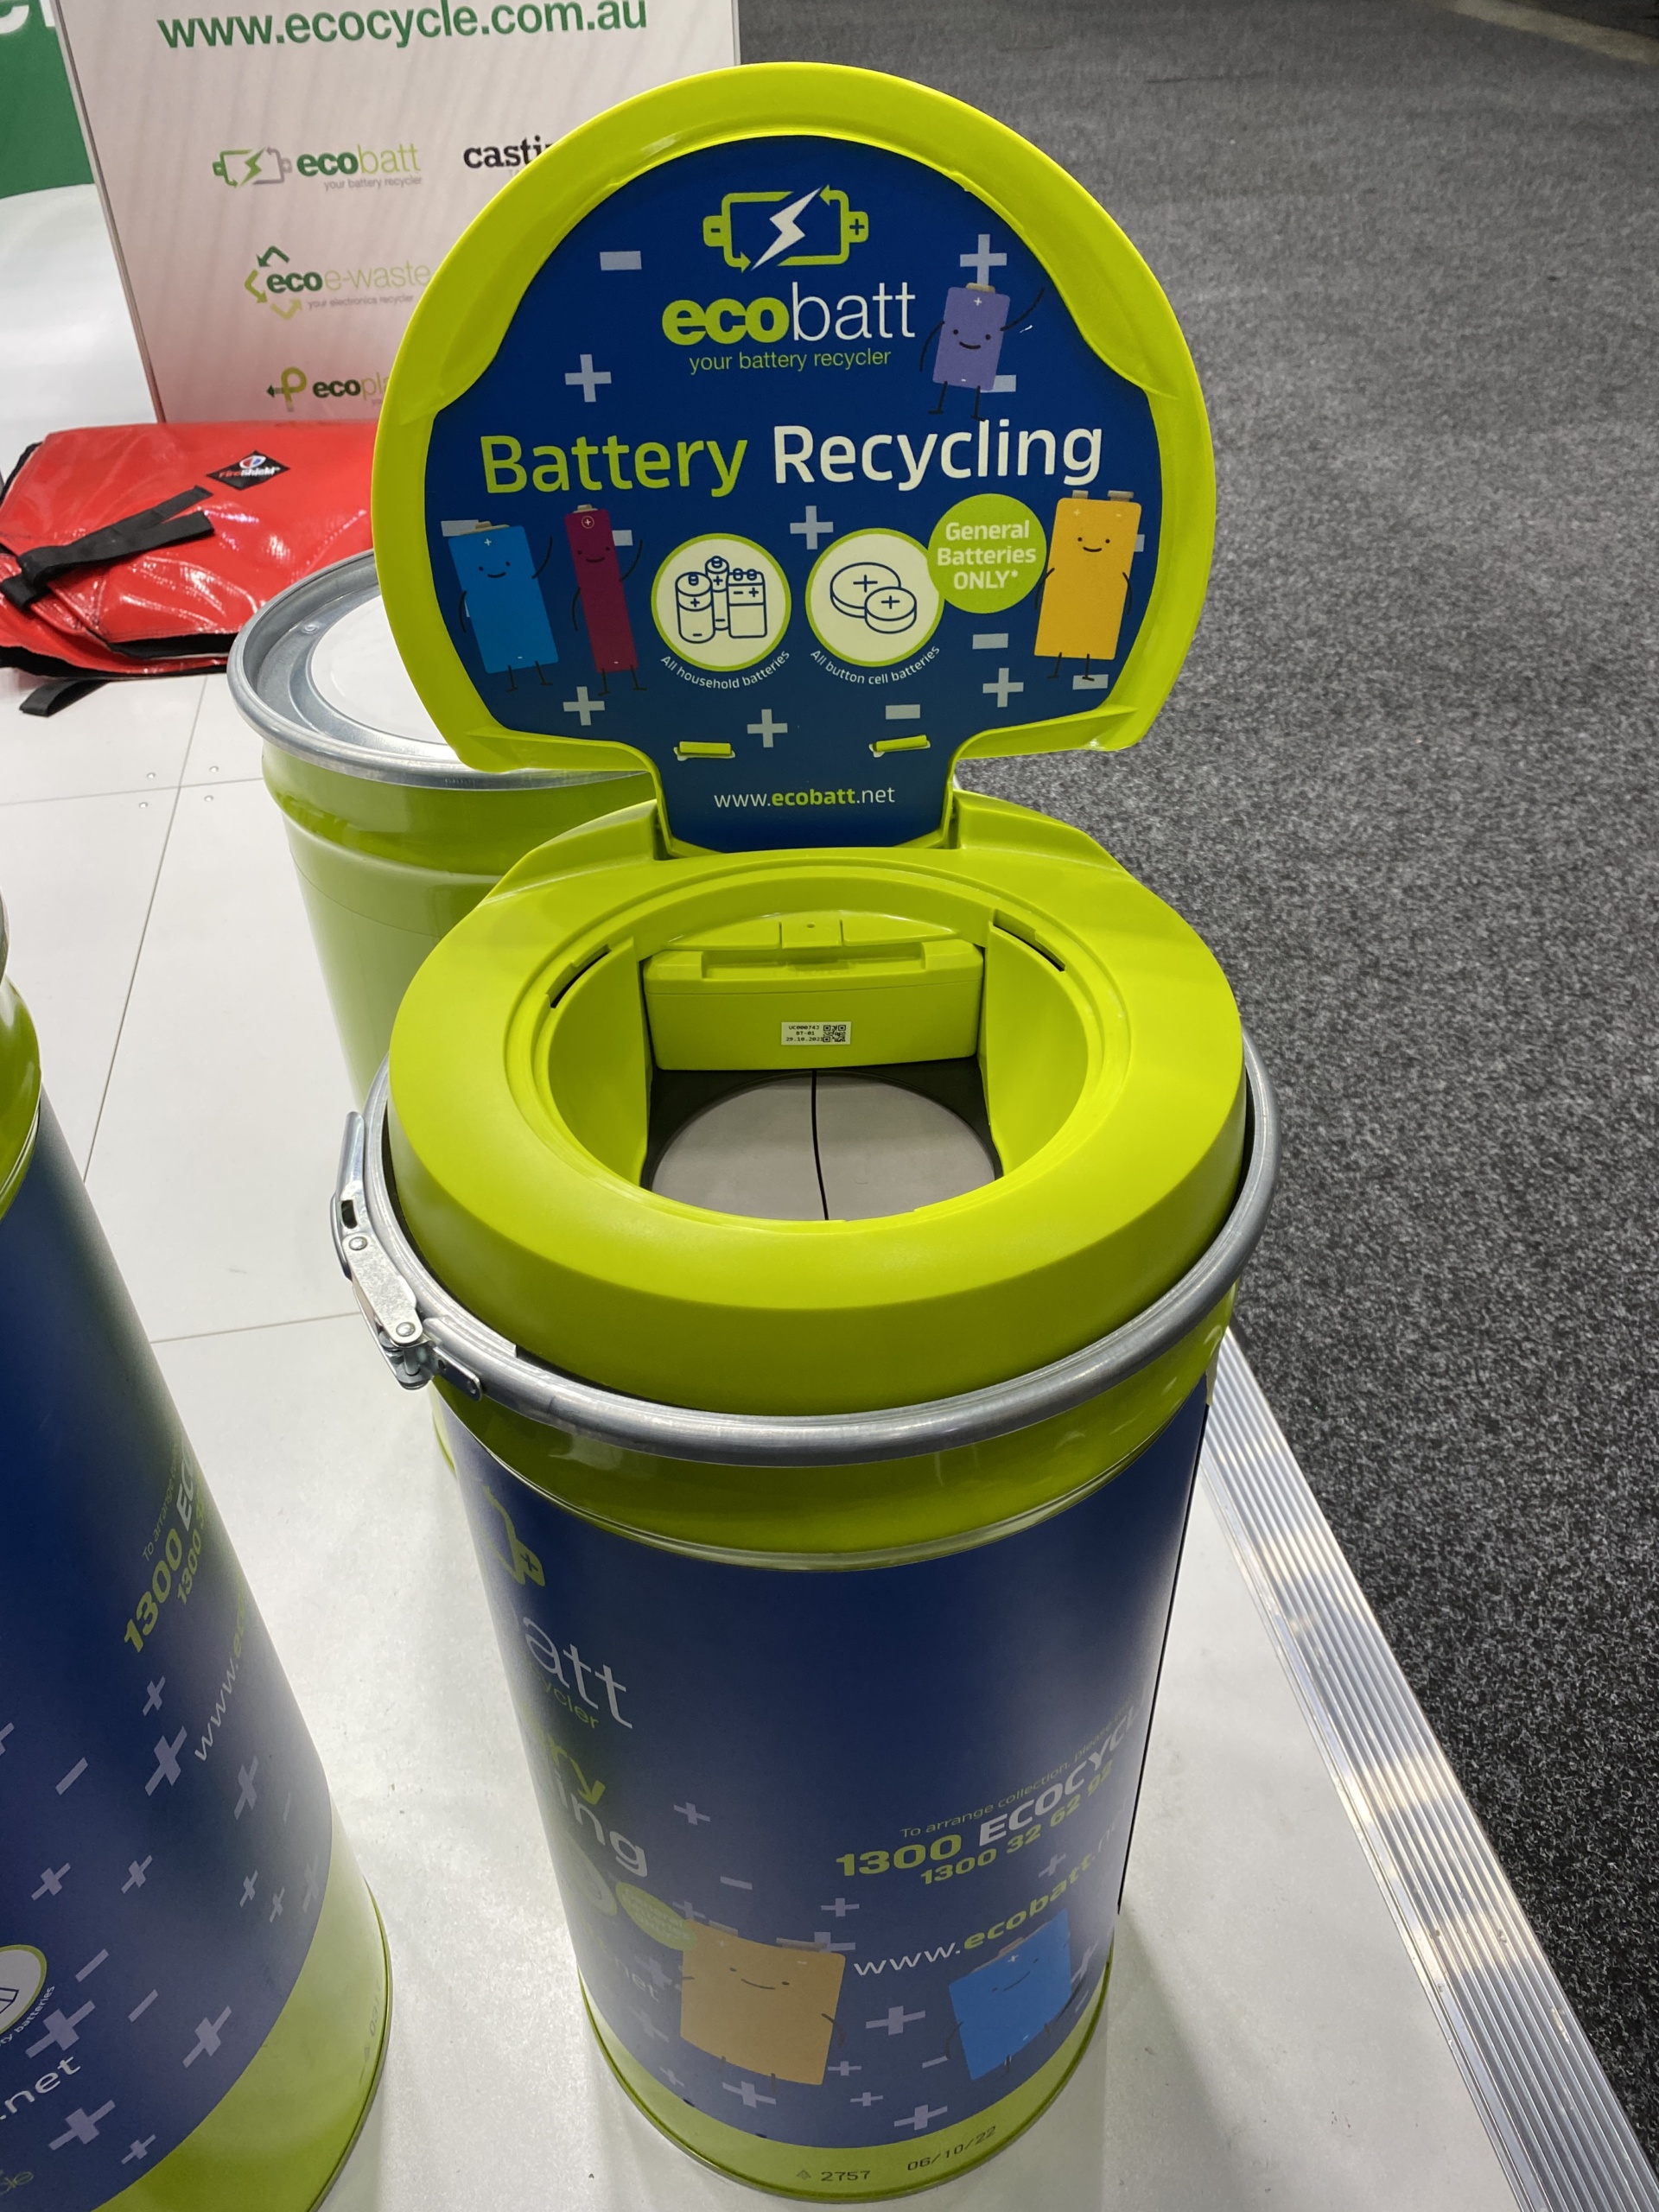 Waste minimisation & management – Battery recycling